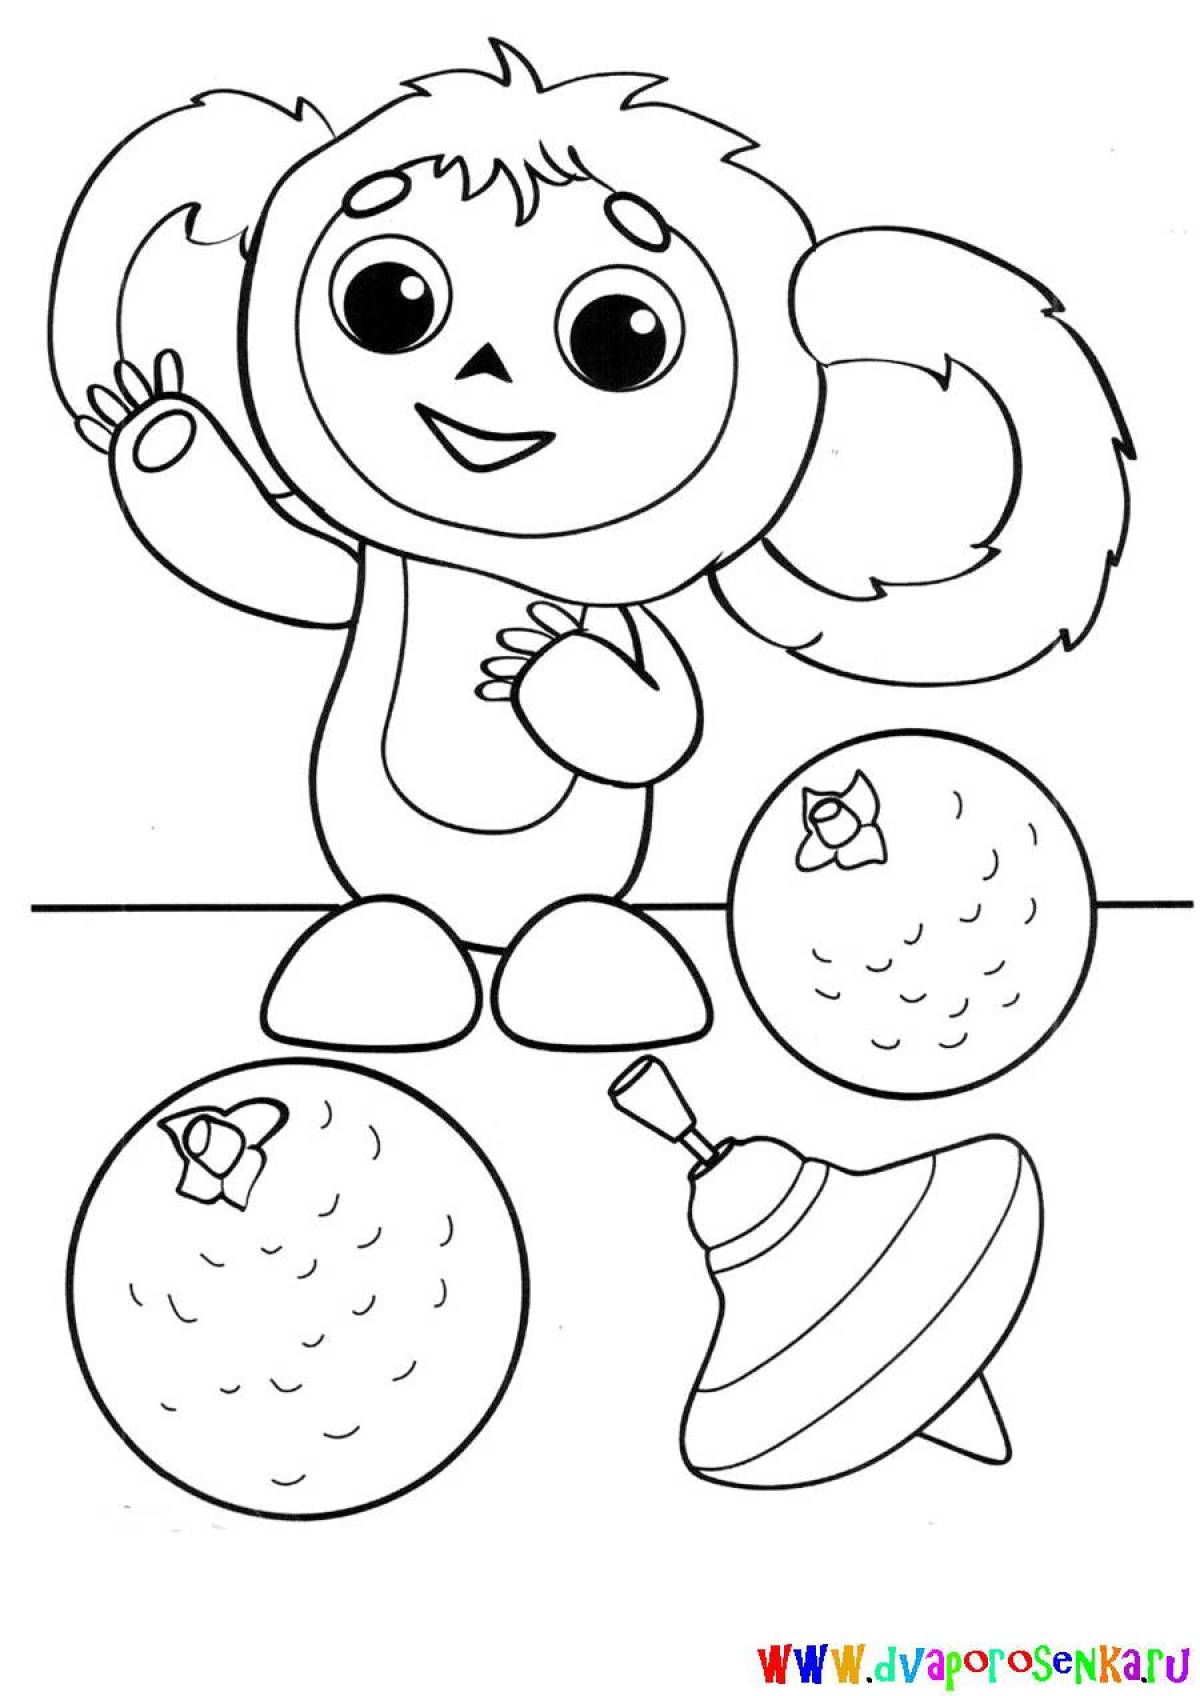 Cheburashka coloring book for kids